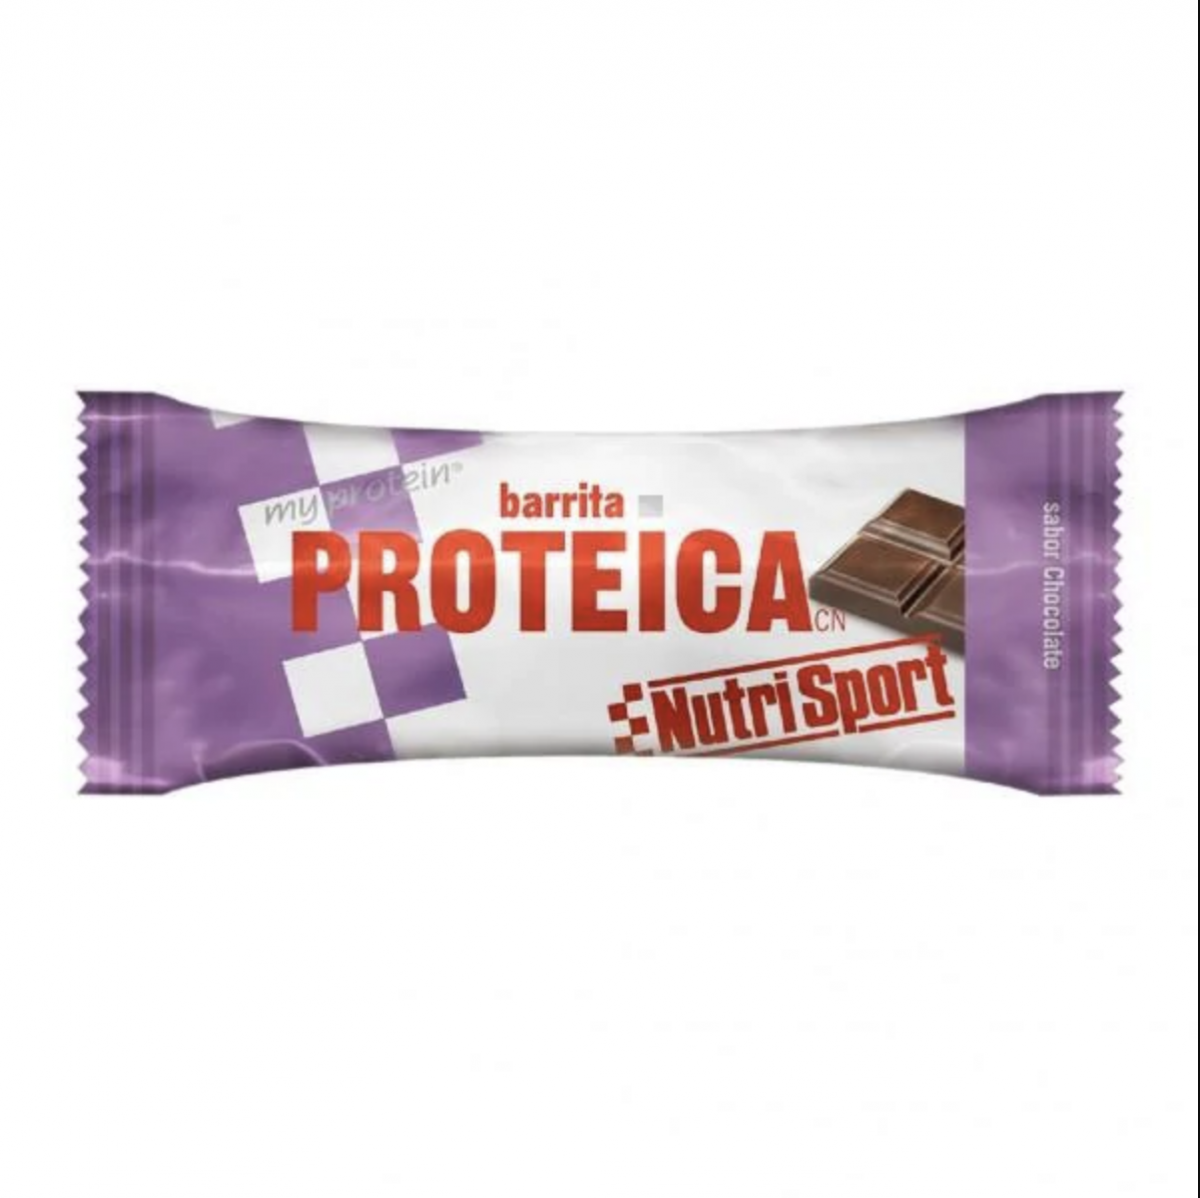 Barritas Nutrisport chocolate